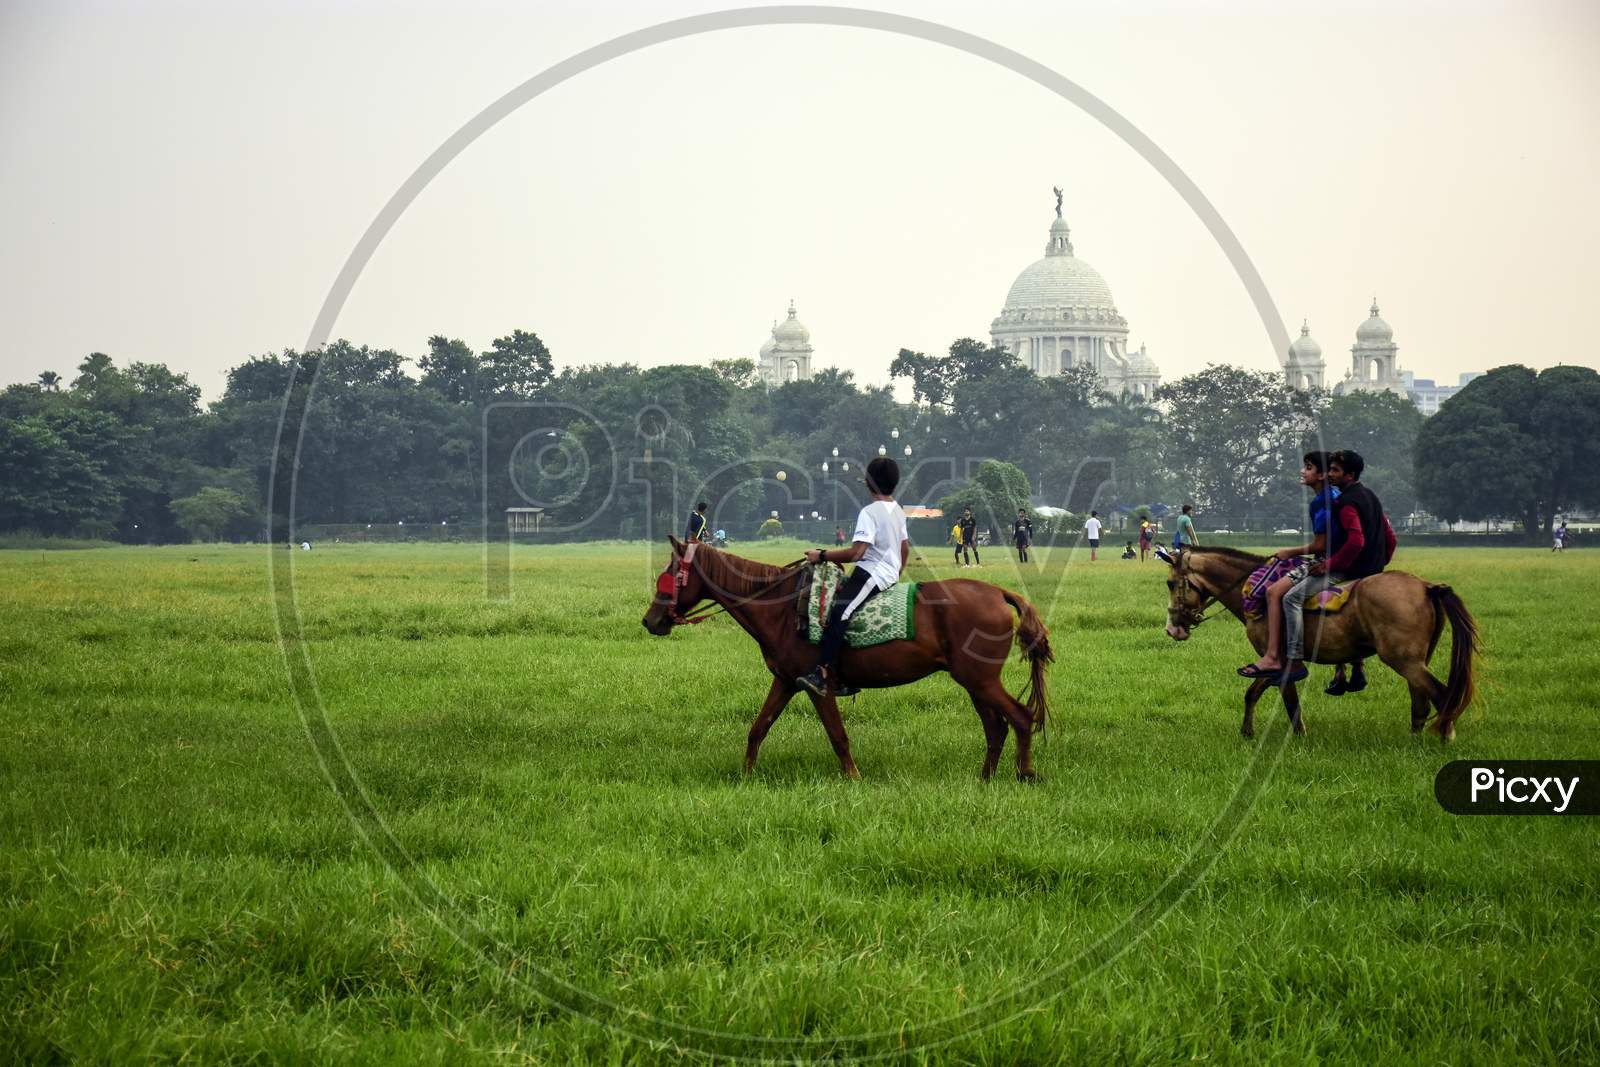 The Horse riders in Brigrate parade ground, Kolkata